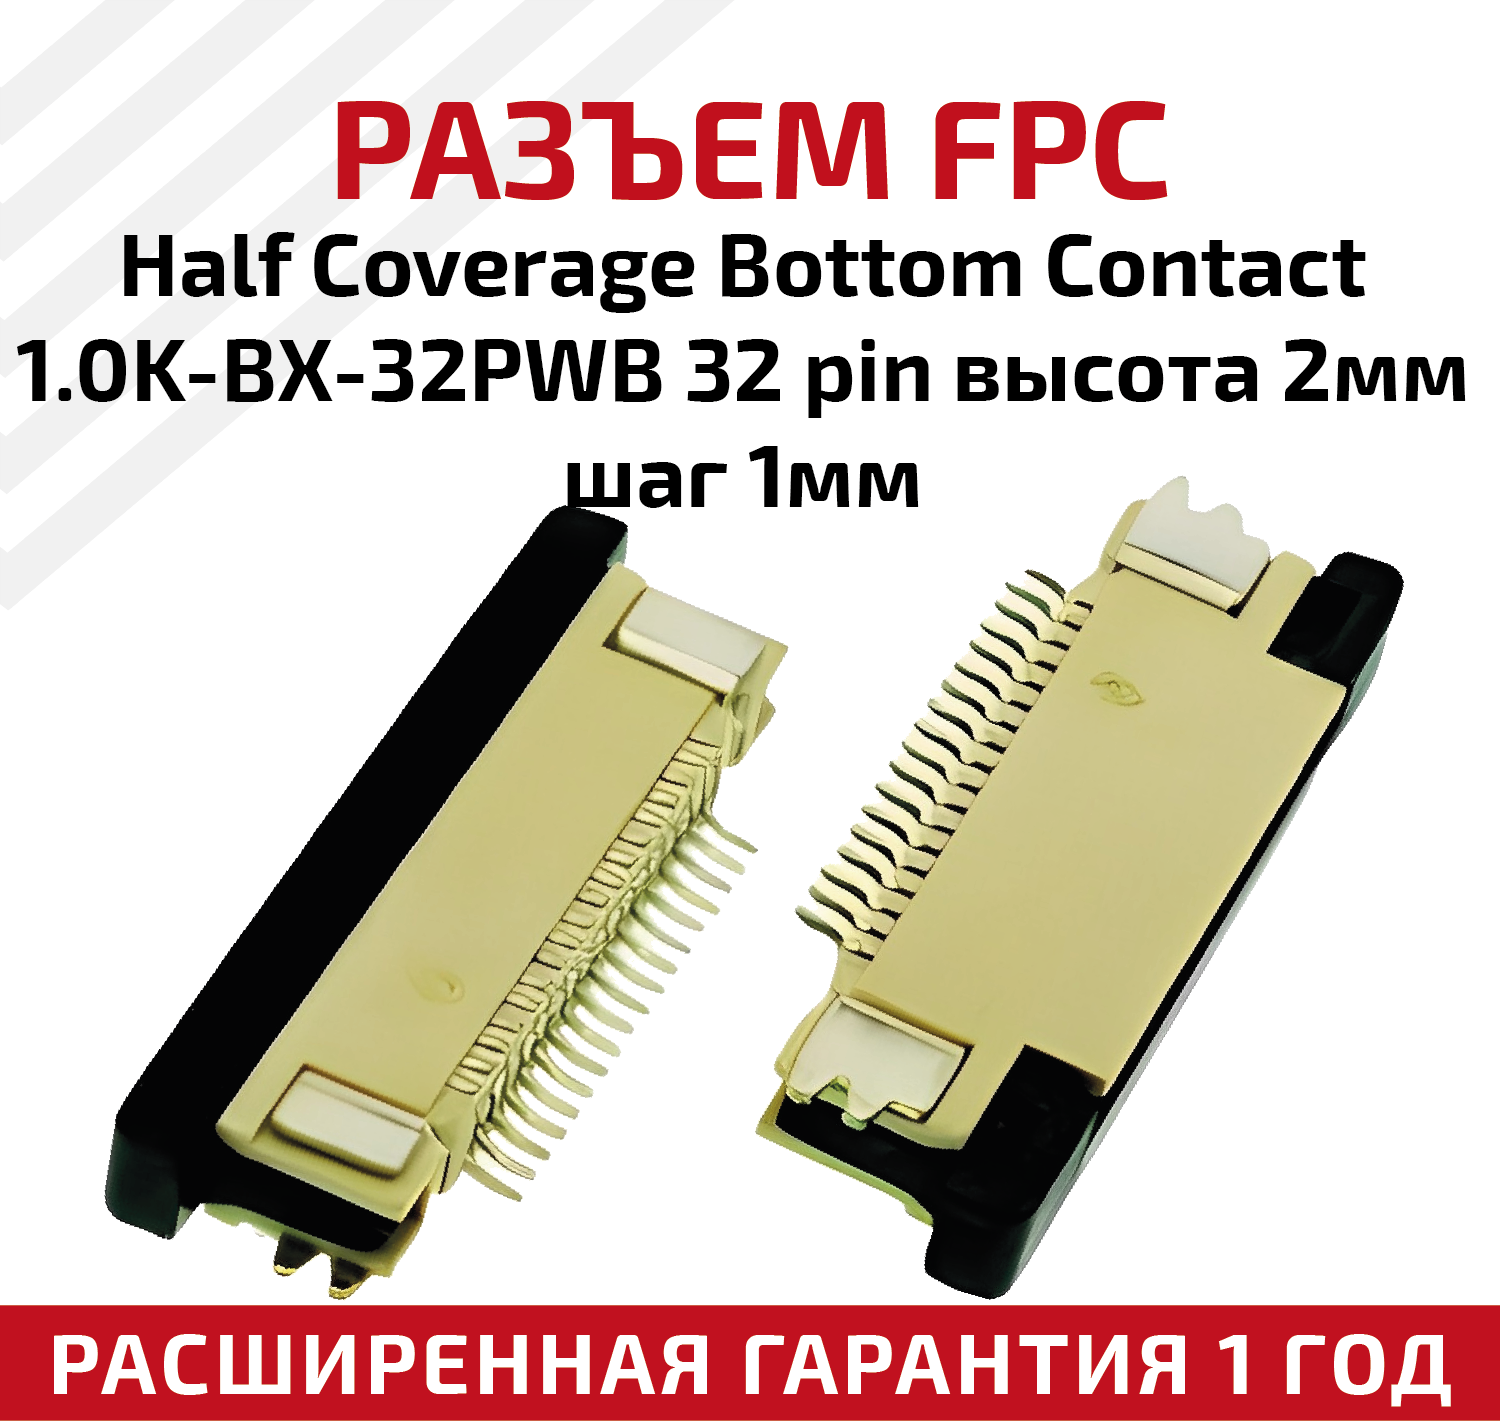 Разъем FPC Half Coverage Bottom Contact 1.0K-BX-32PWB 32 pin высота 2мм шаг 1мм